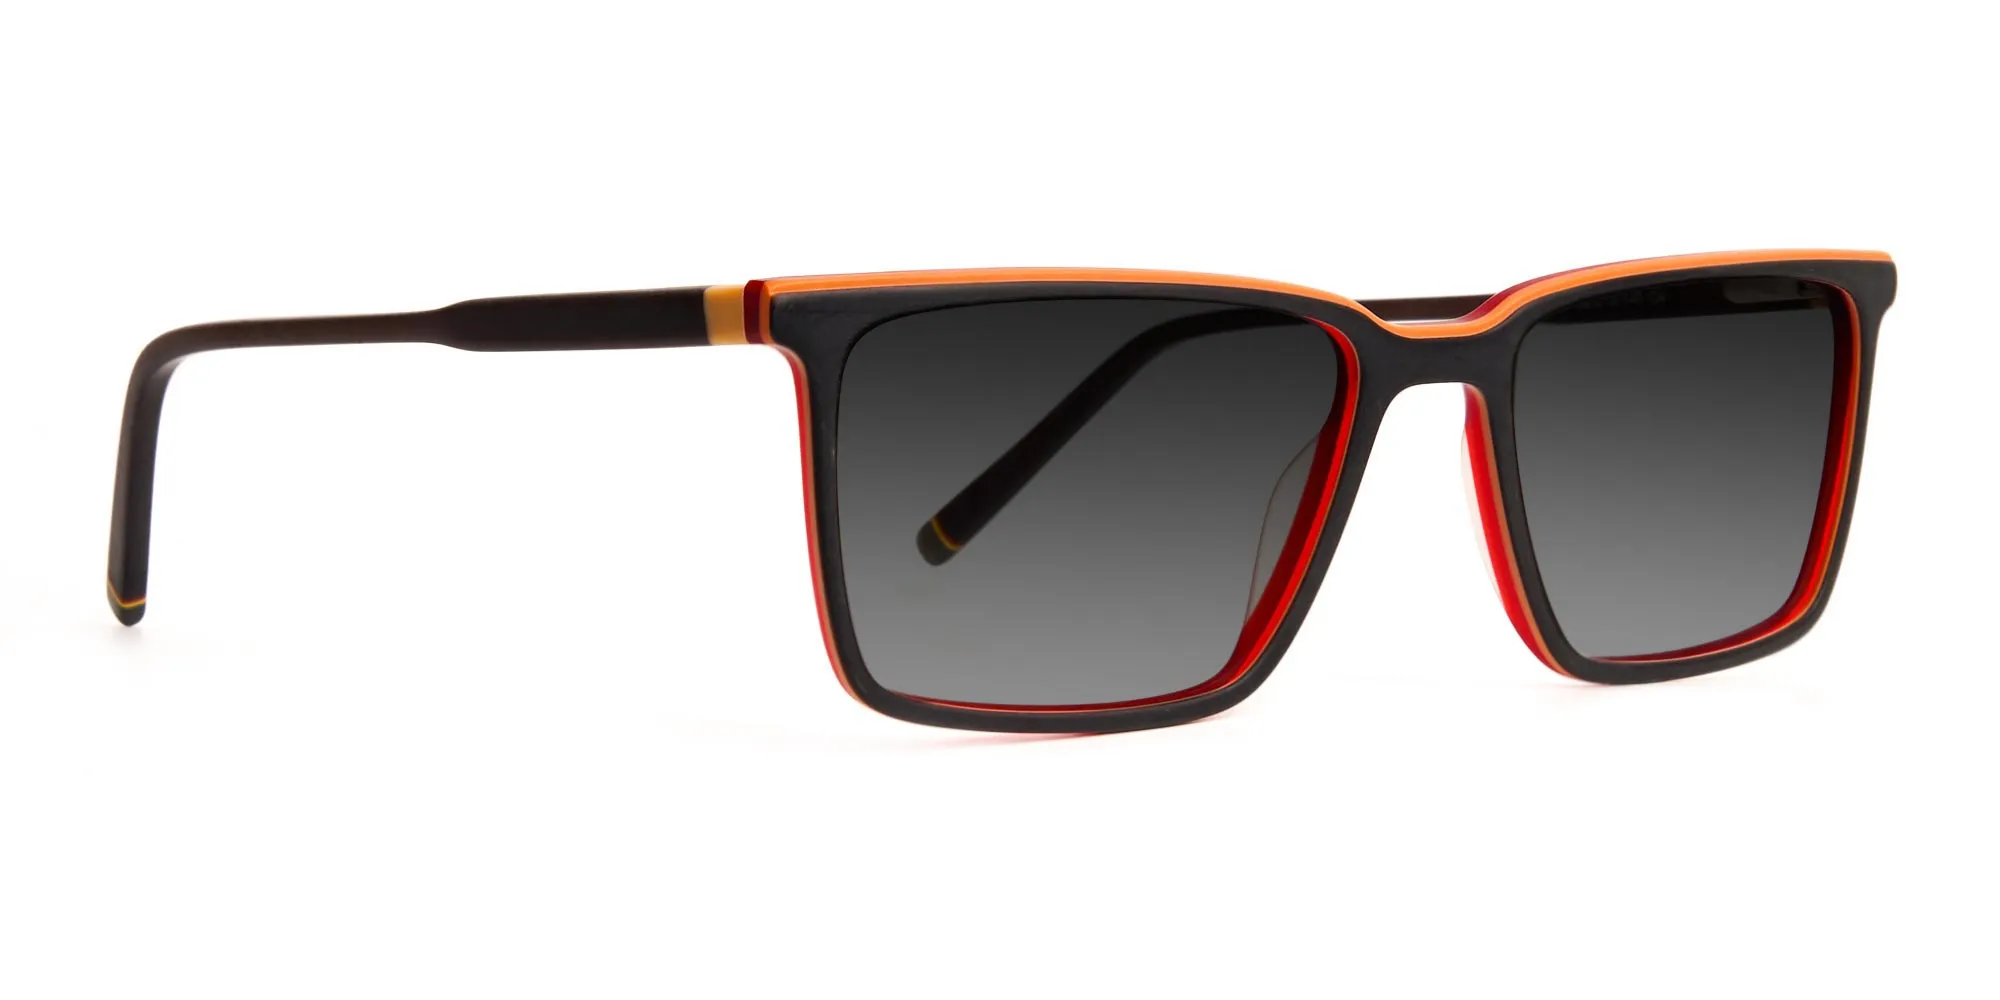 black-and-orange-rectangular-full-rim-grey-tinted-sunglasses-frames-2